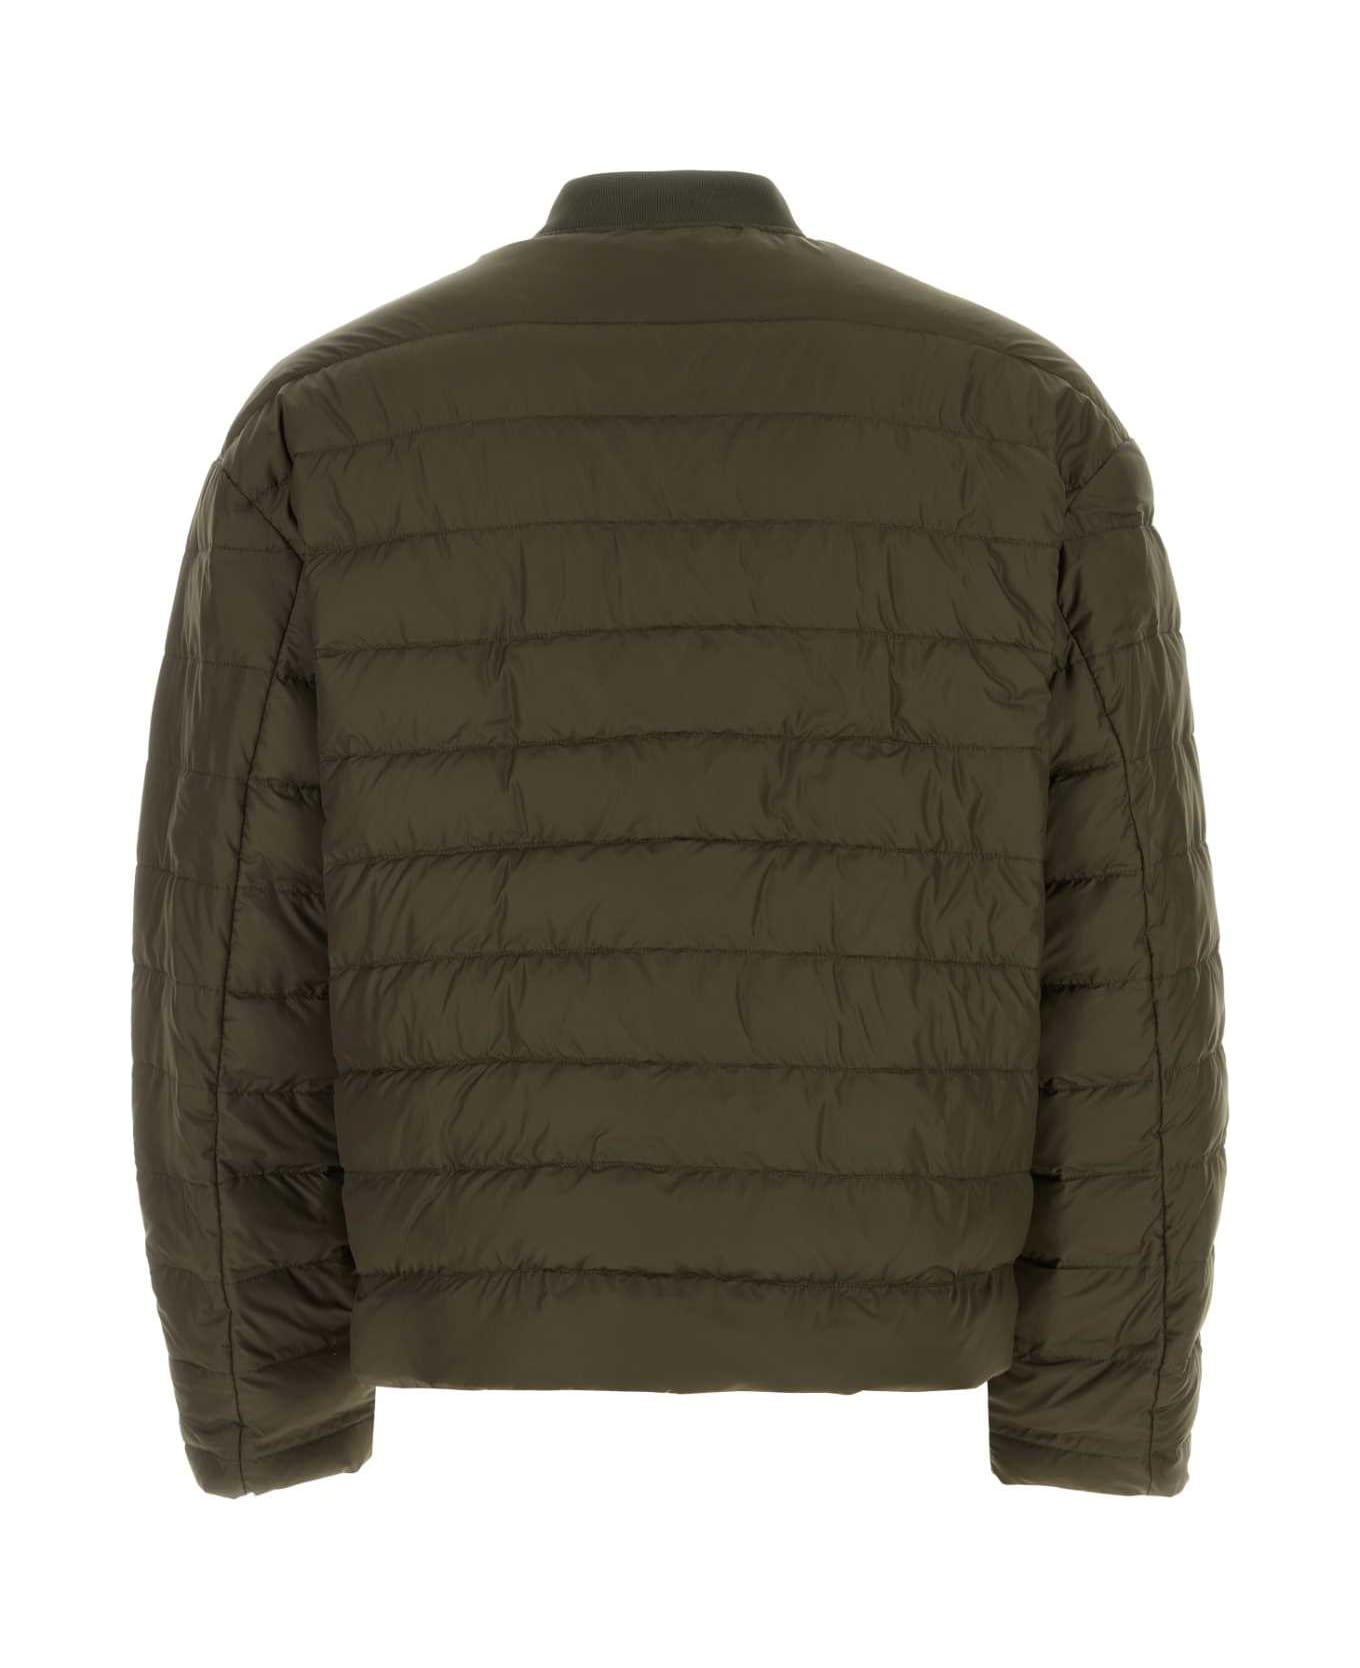 Prada Army Green Polyester Down Jacket - MILITARE